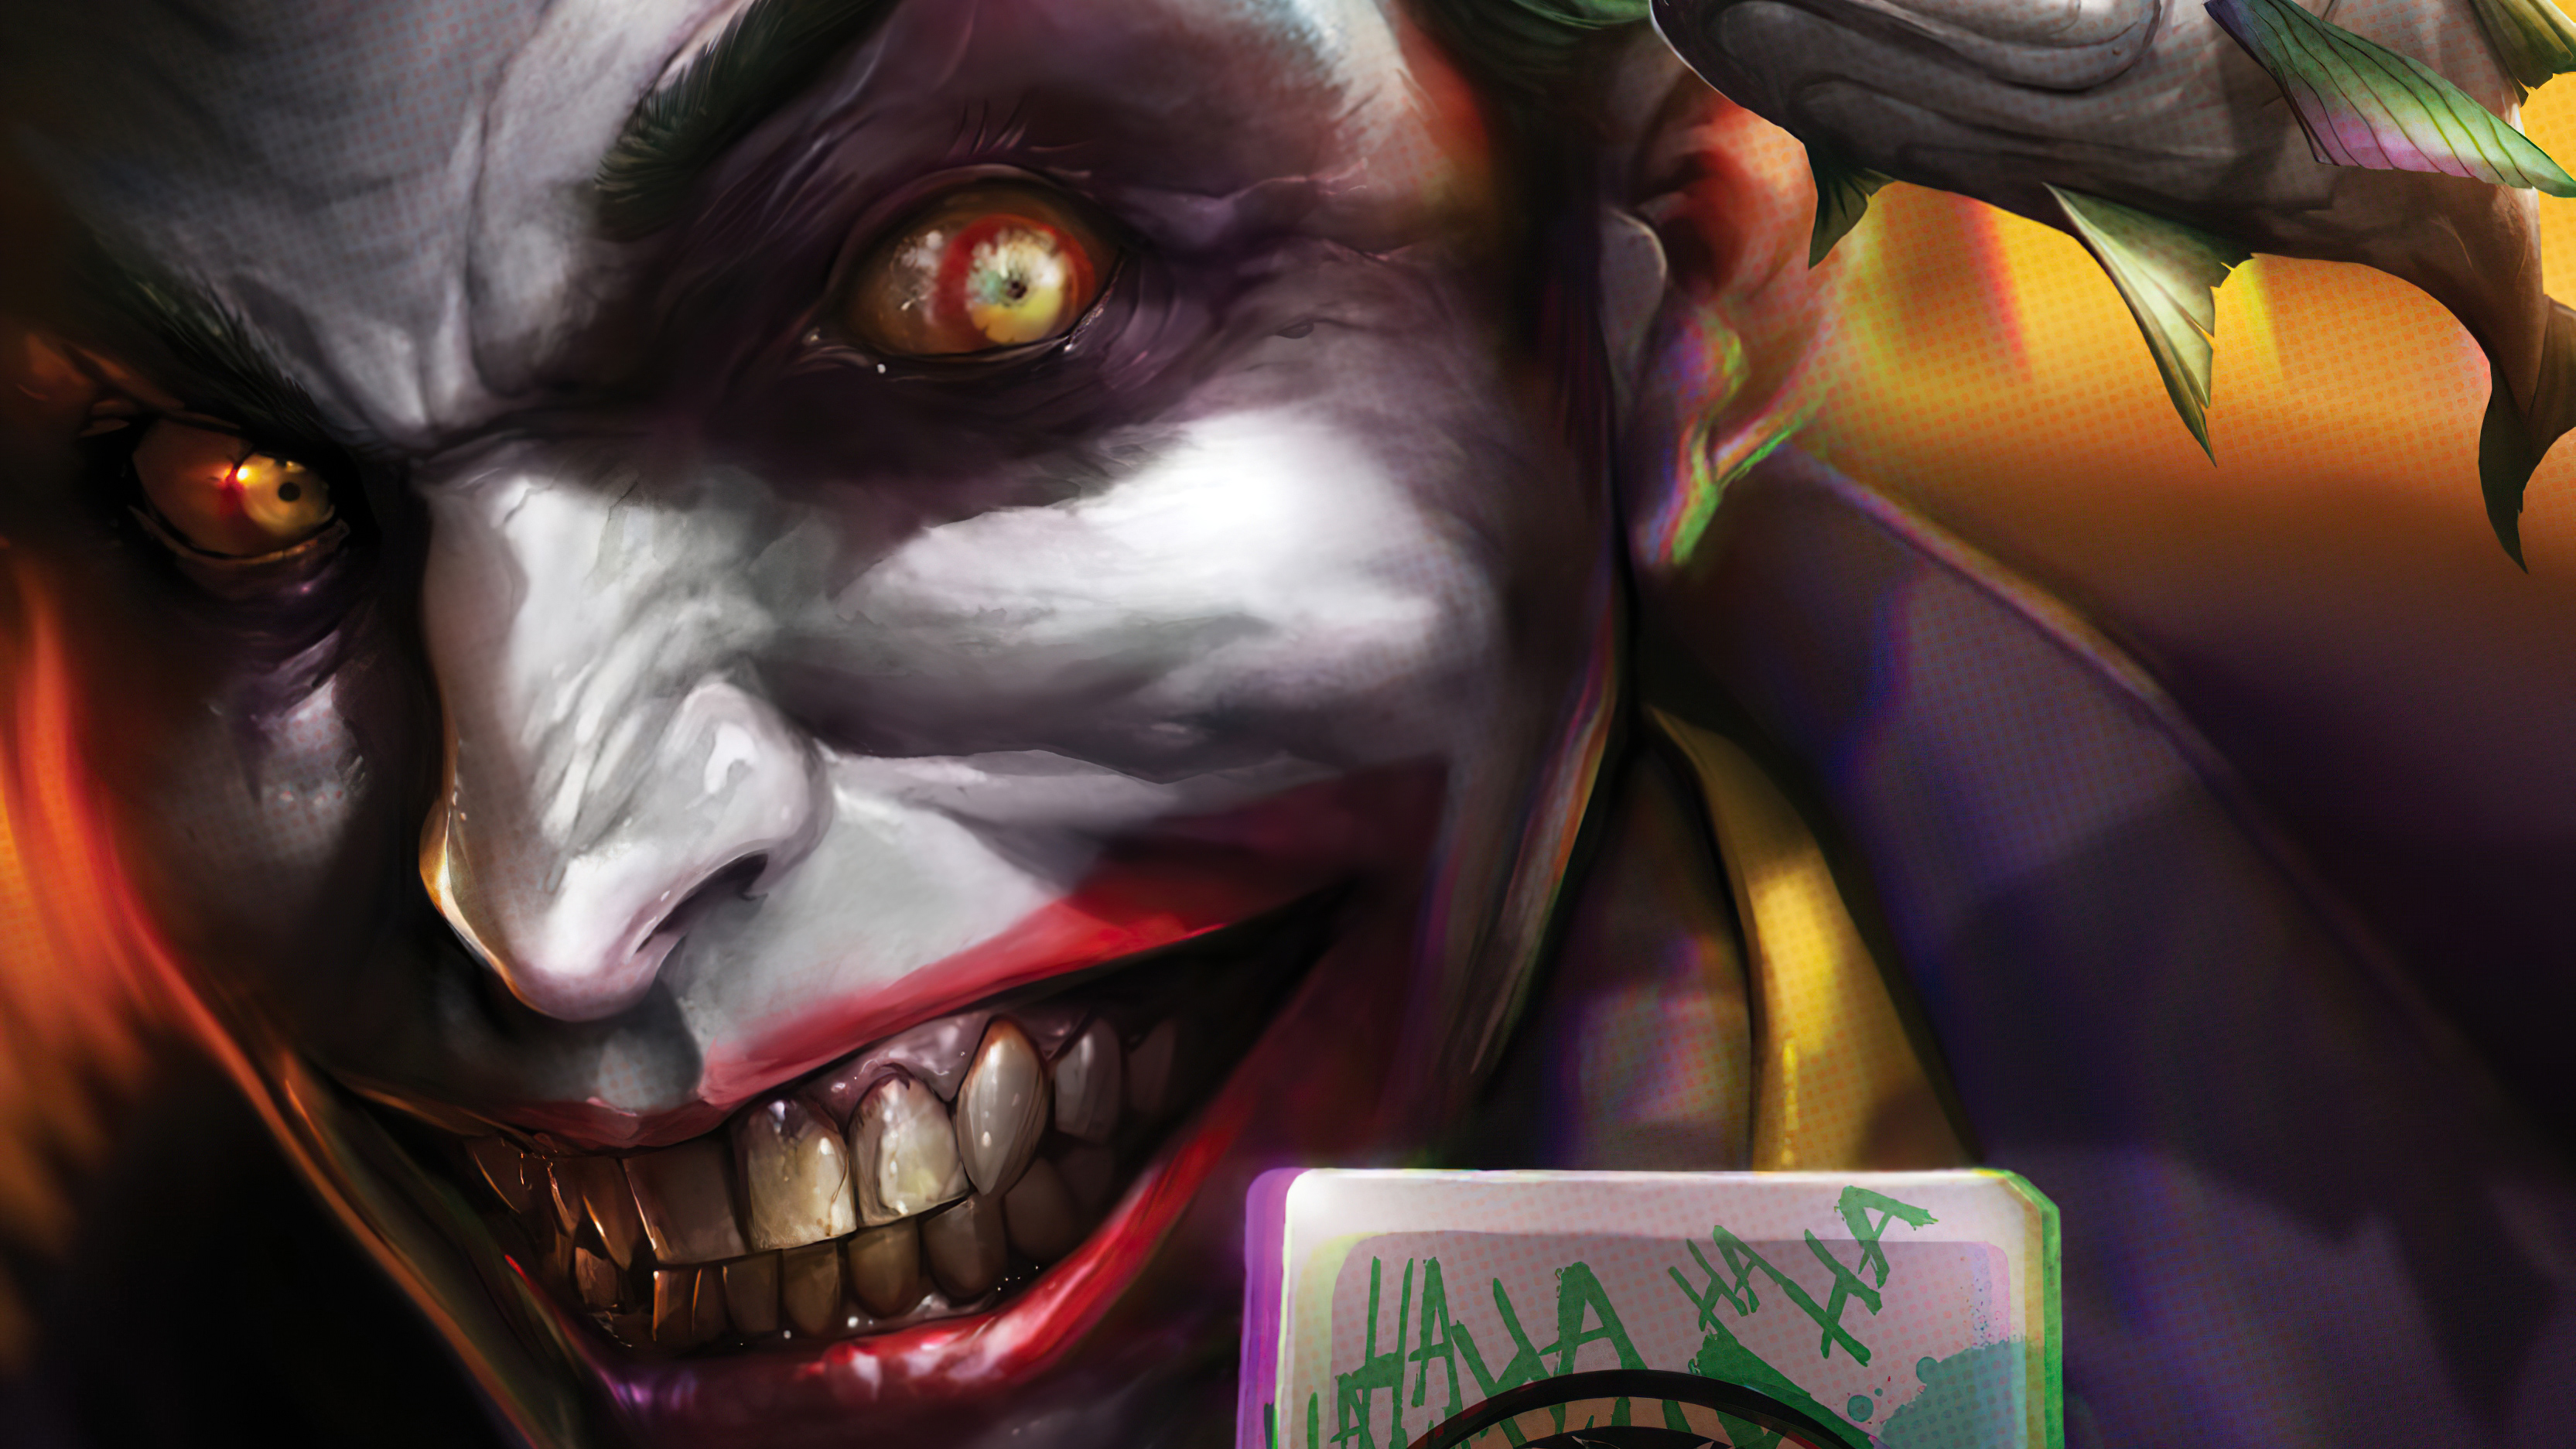 Crazy Joker DC Comic Wallpaper, HD Superheroes 4K Wallpapers, Images,  Photos and Background - Wallpapers Den